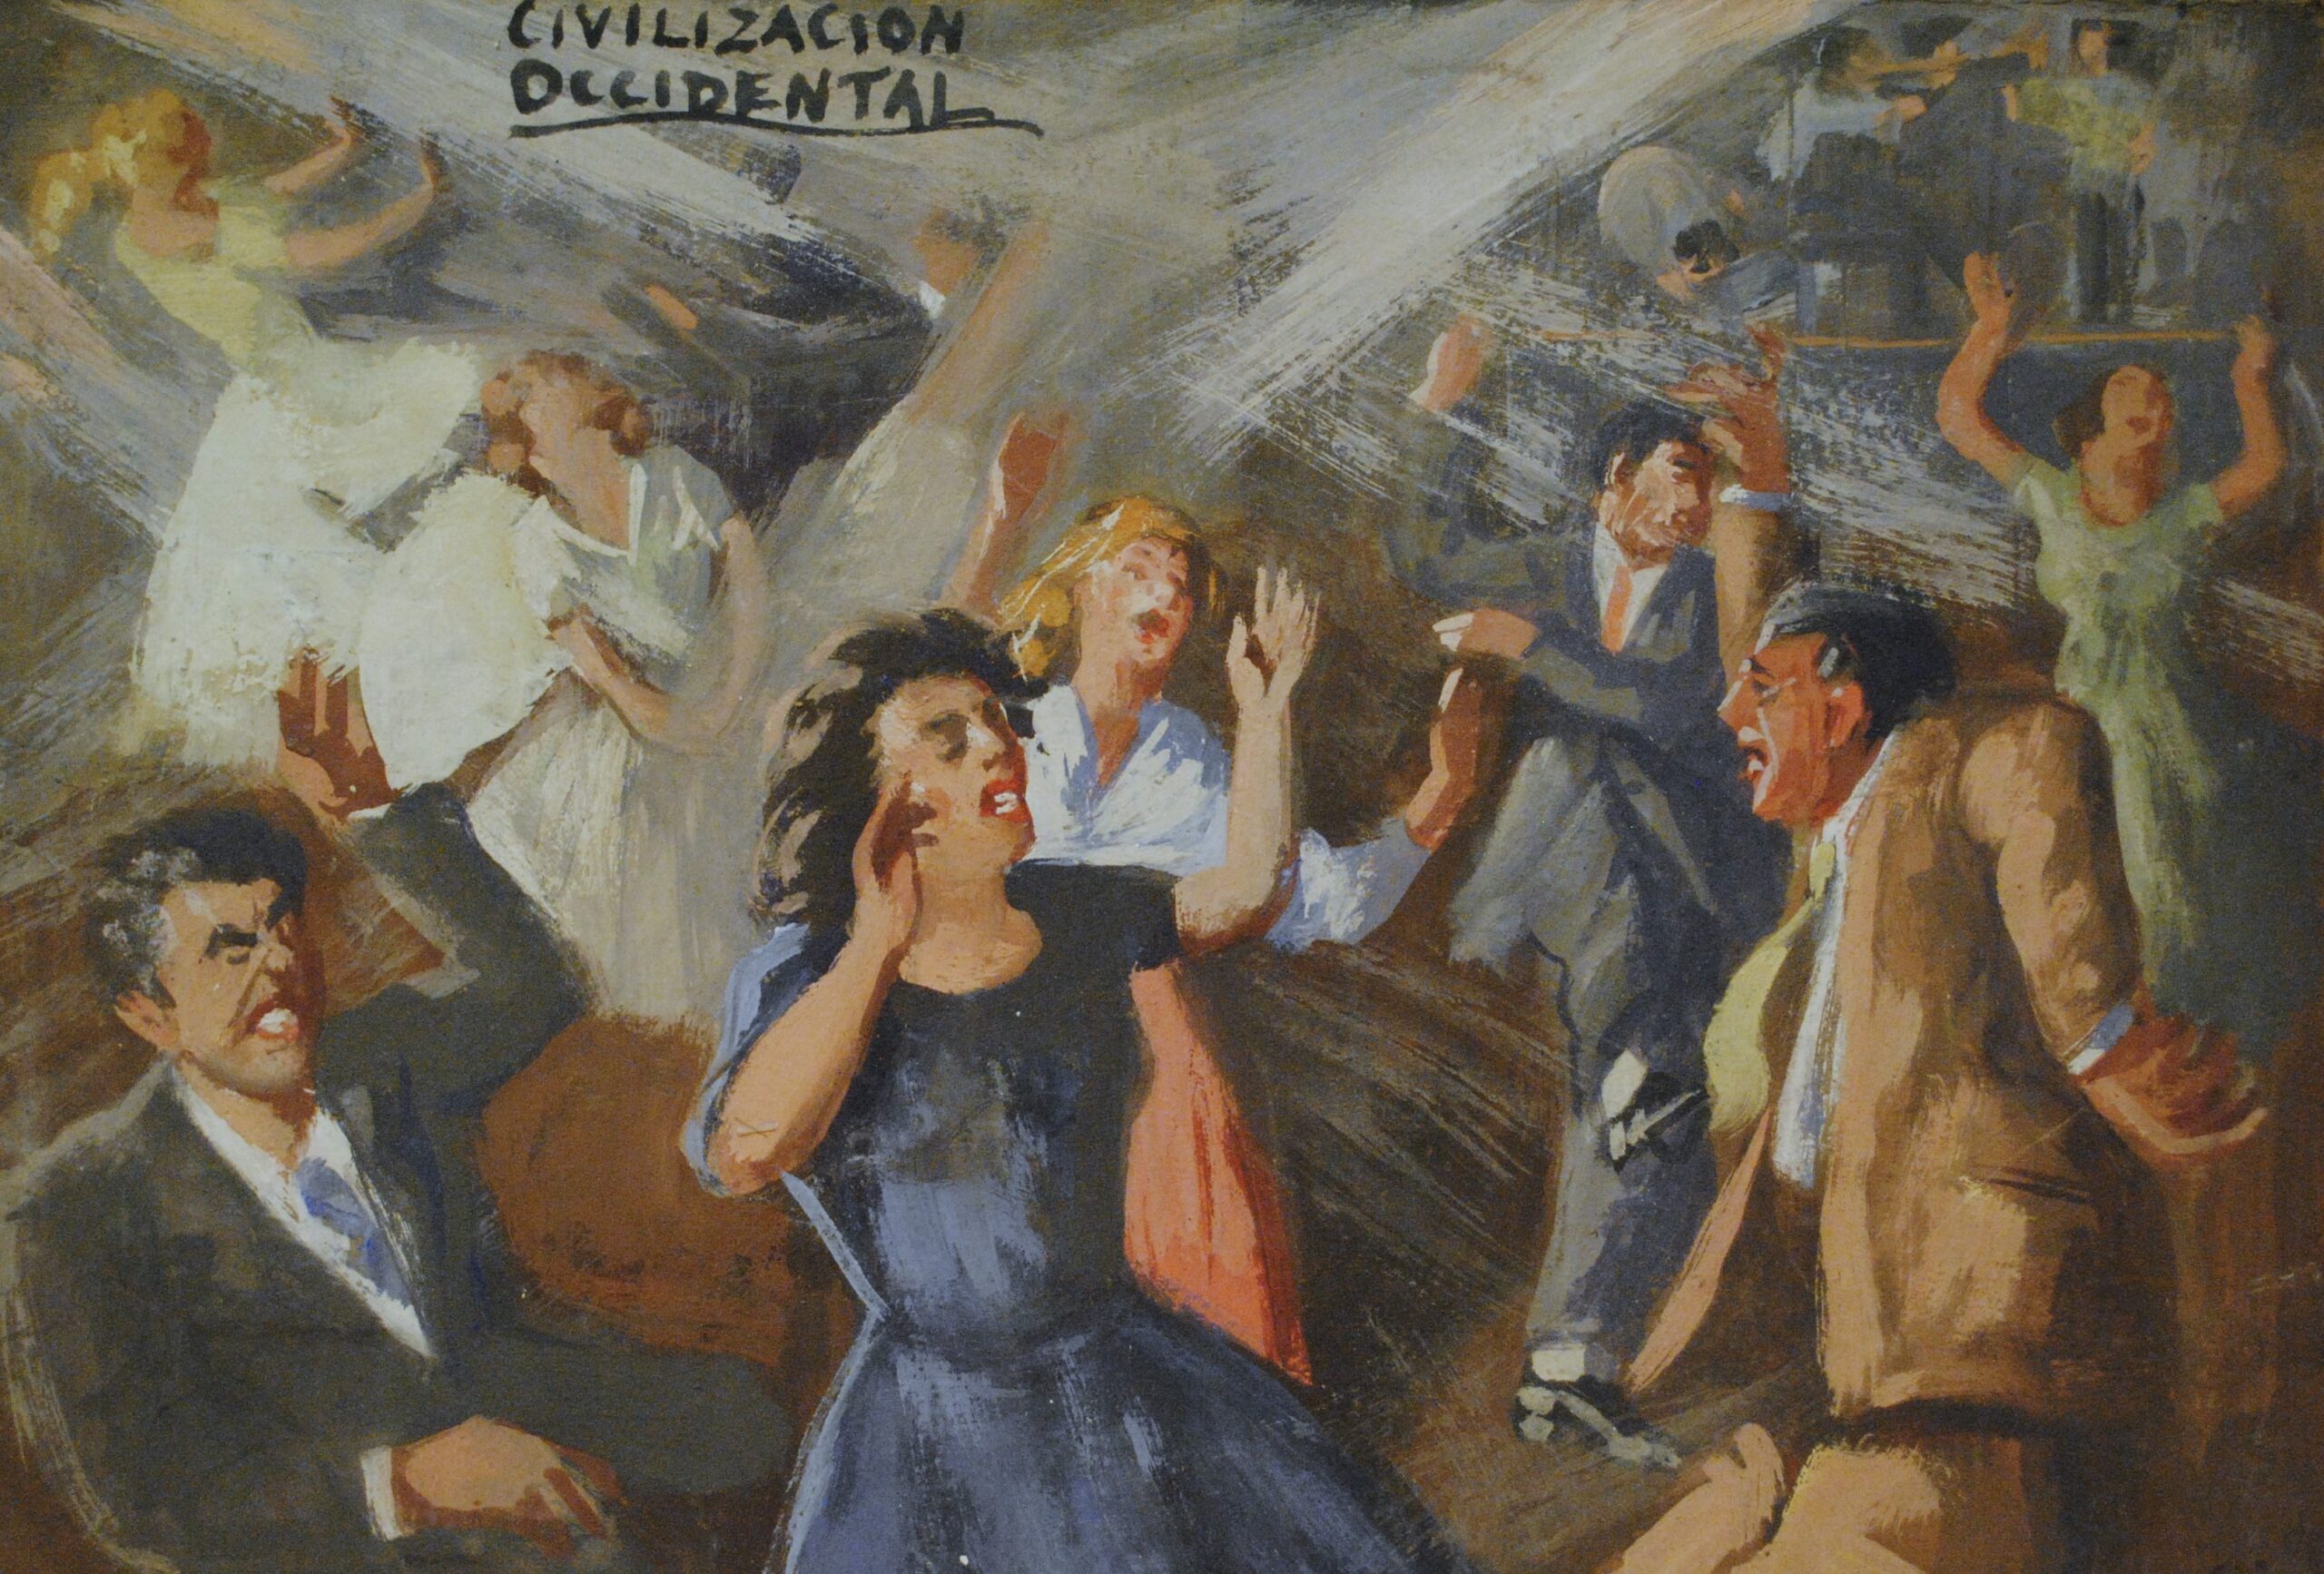 Pintura de José Manaut titulada Civilización occidental, rock. Óleo sobre cartón.